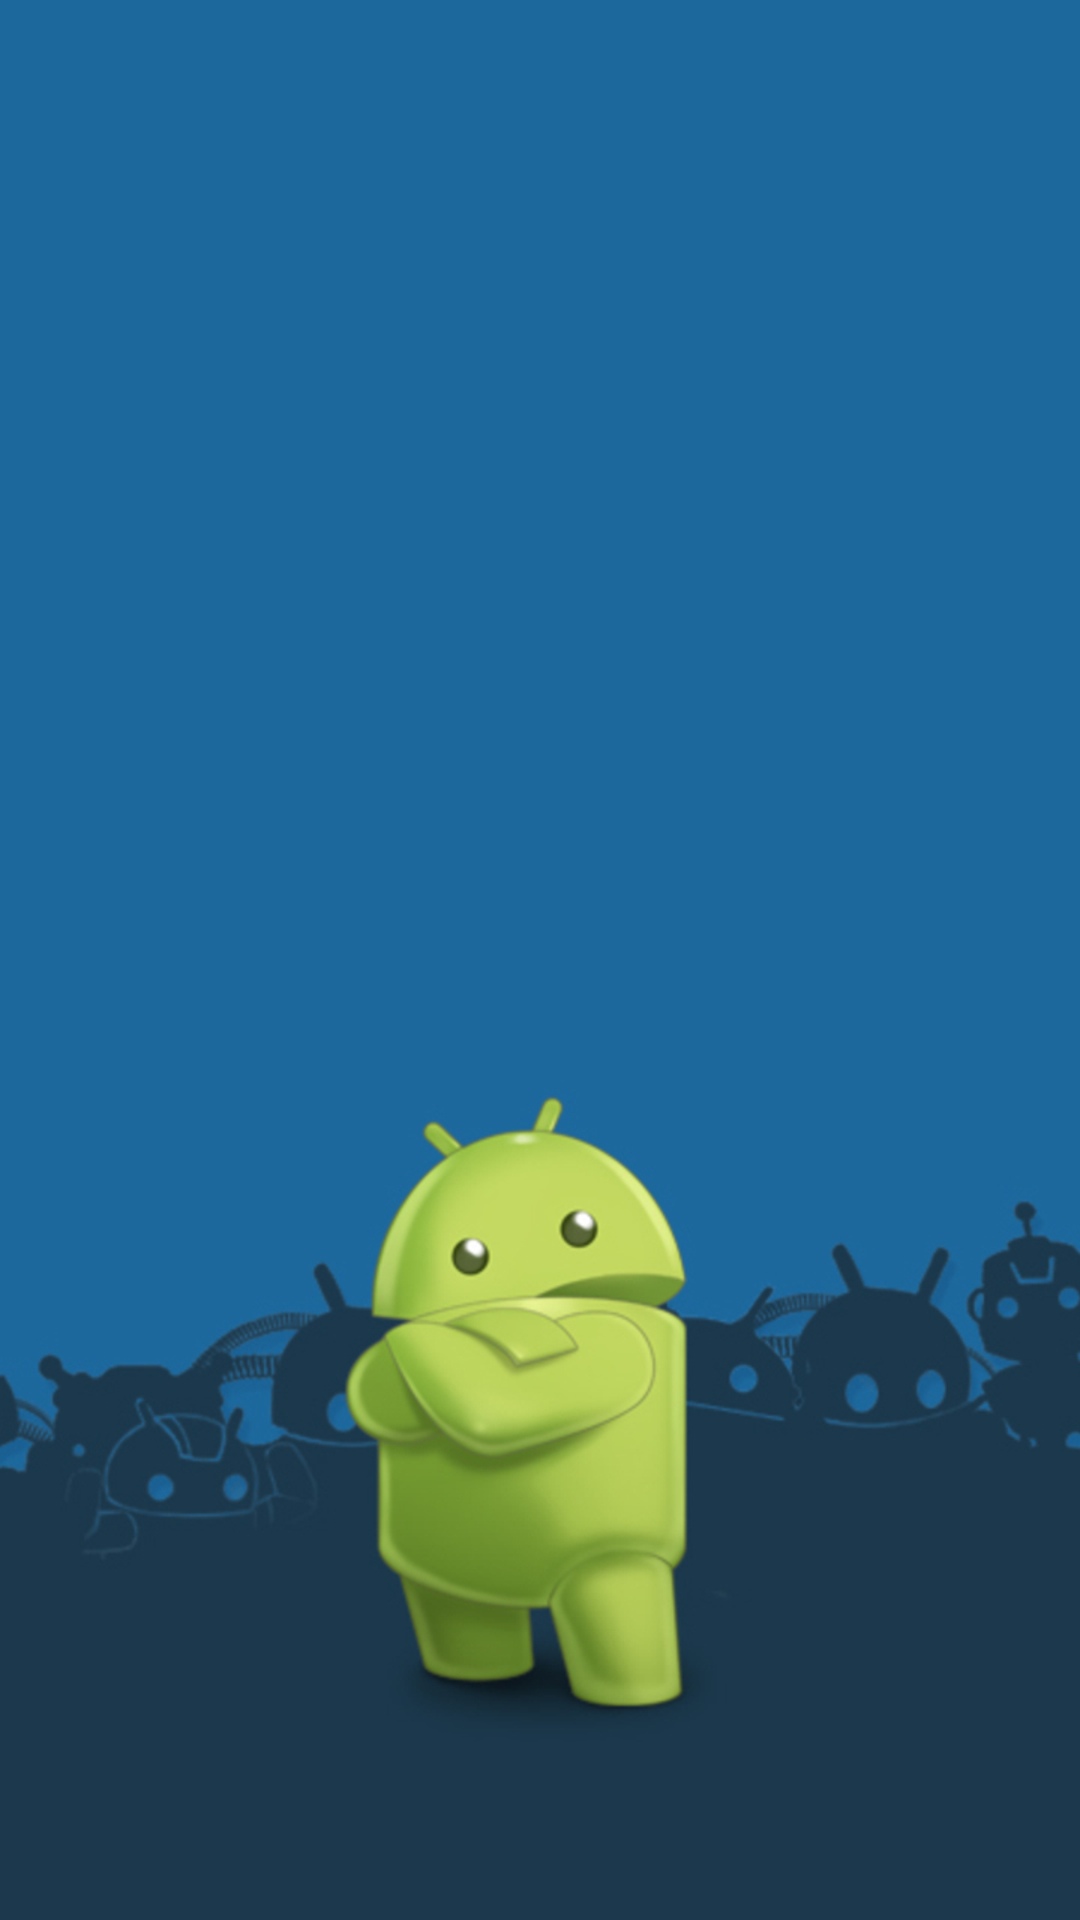 androidスマートフォン用の壁紙,青い,緑,漫画,黄,図